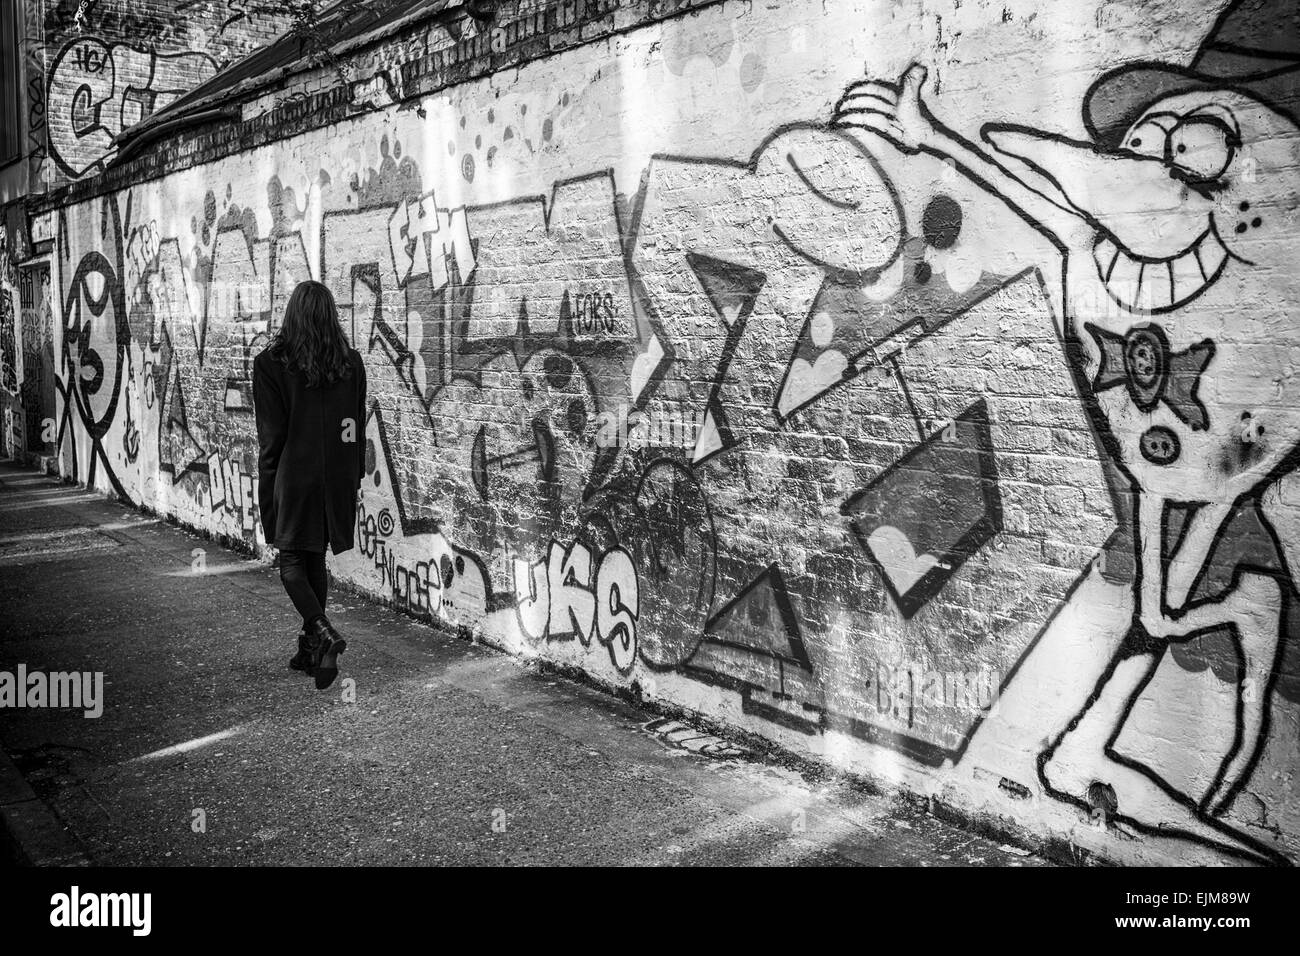 Woman & Graffiti, Near Brick Lane, London Stock Photo